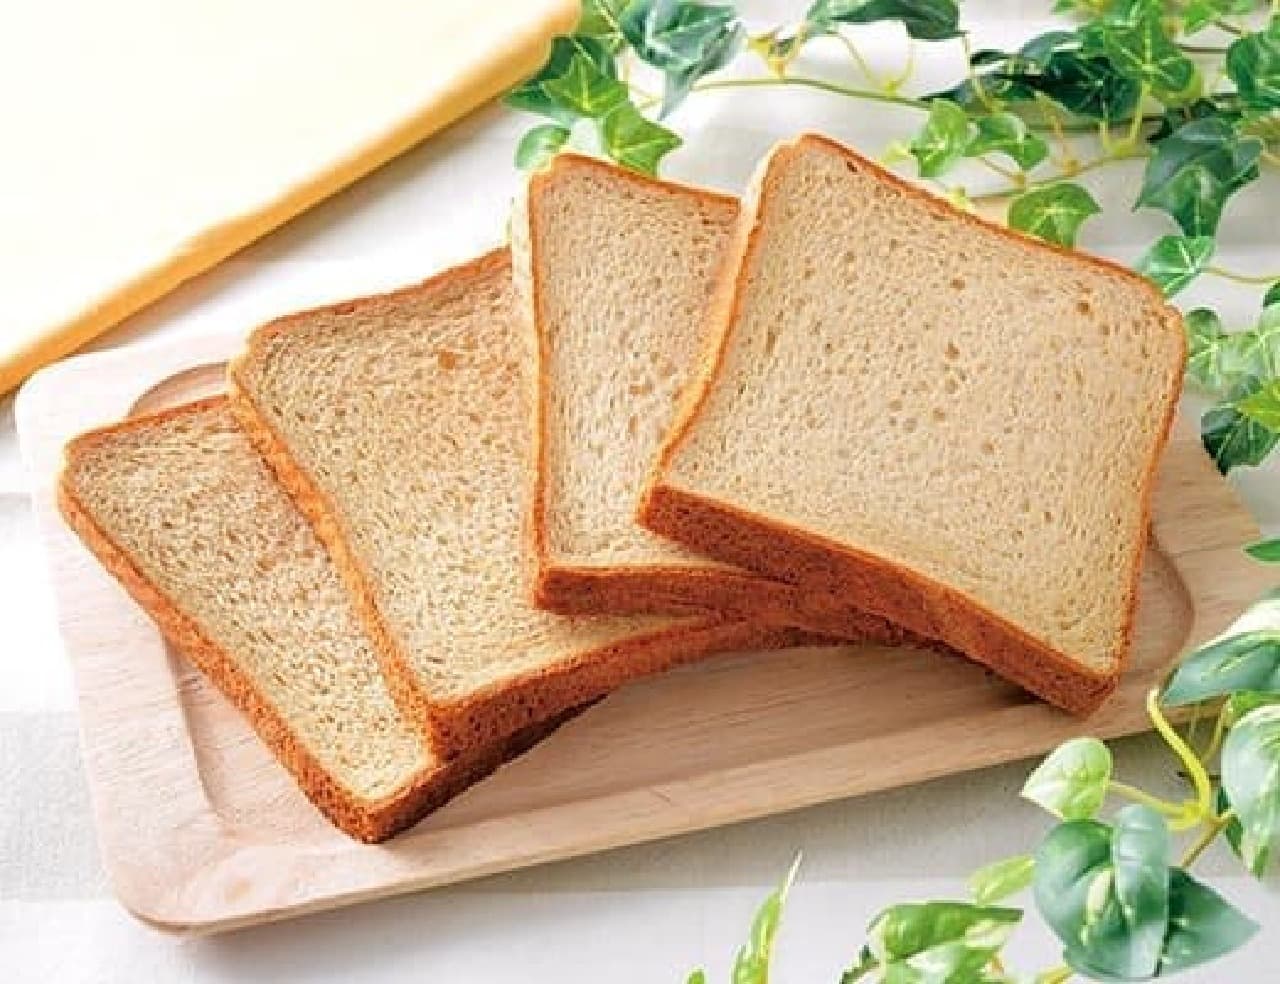 Bread with Lawson bran